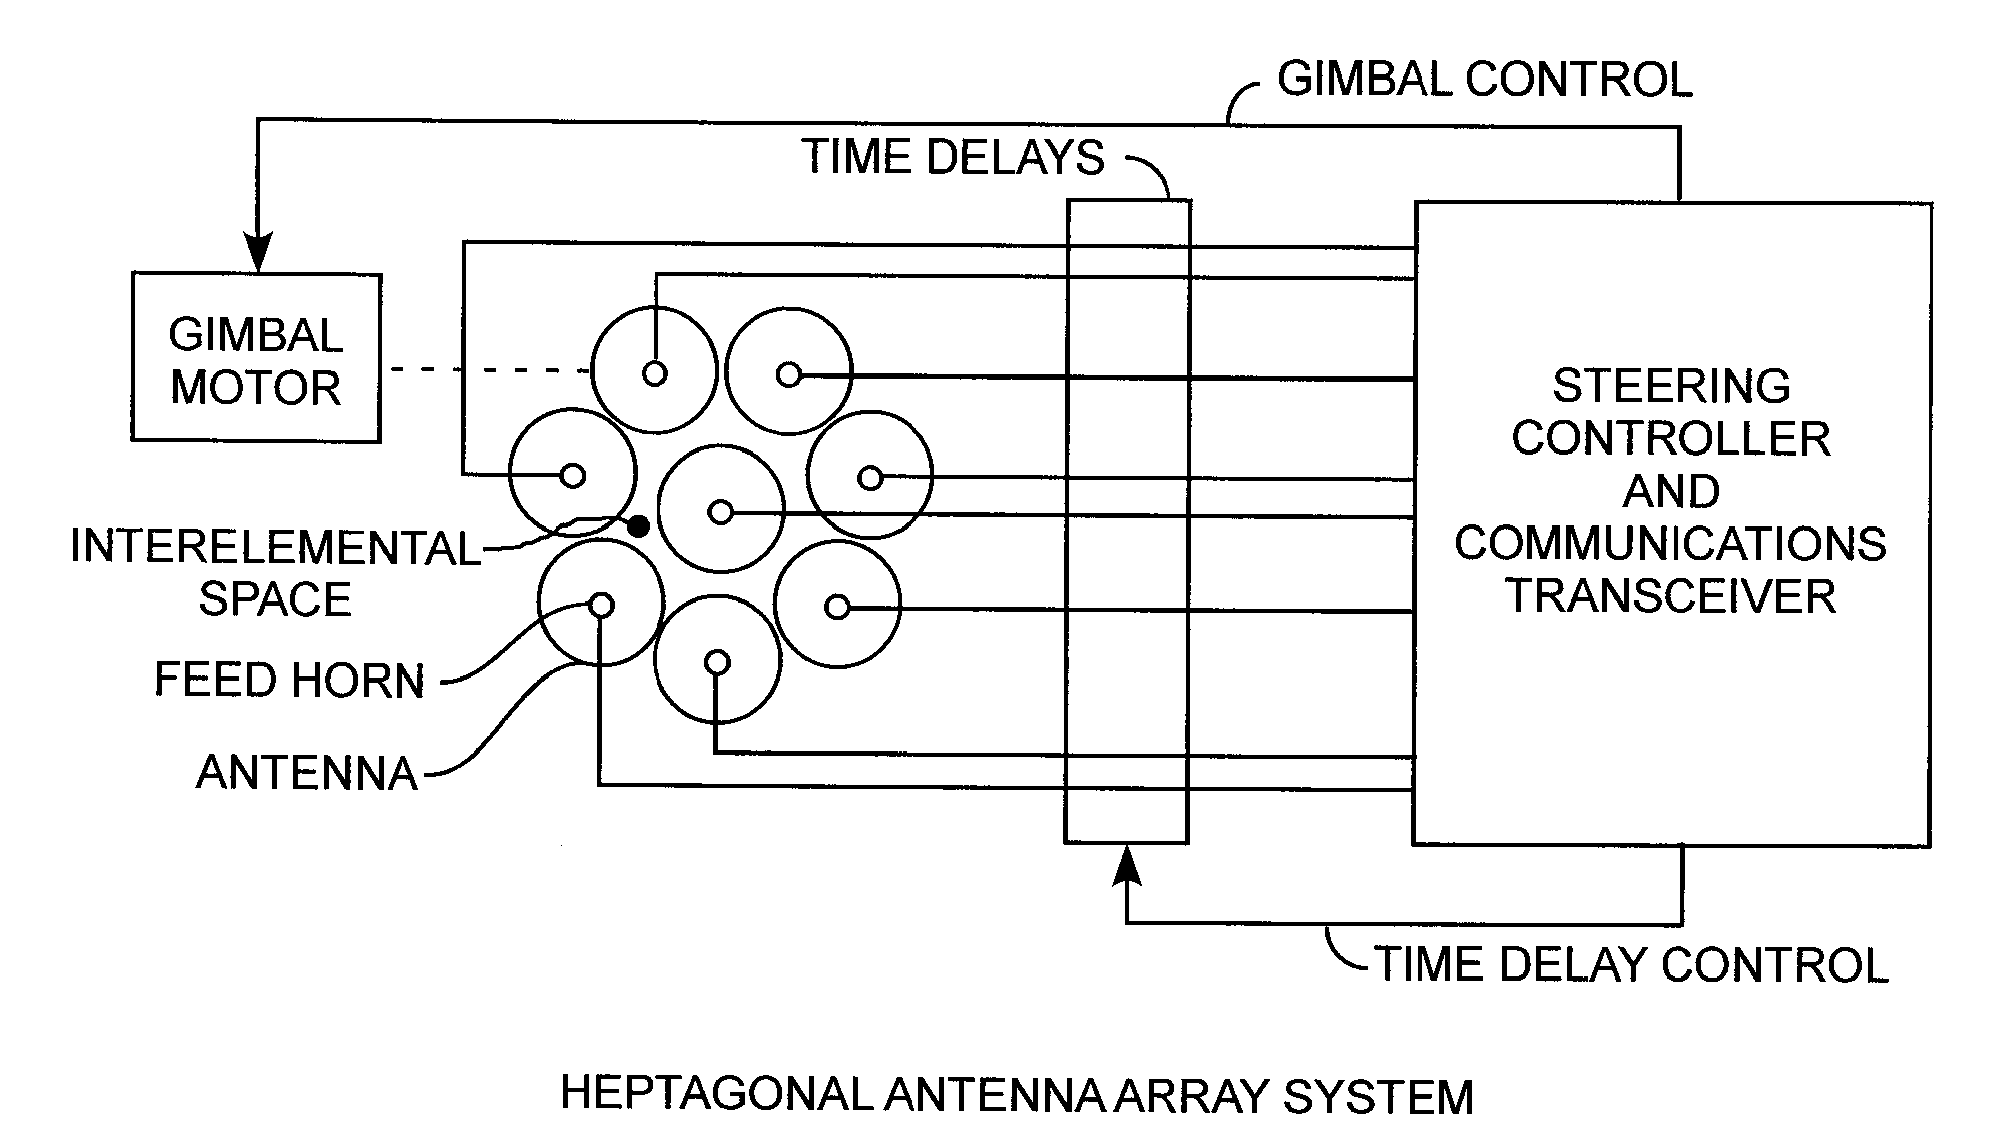 Heptagonal antenna array